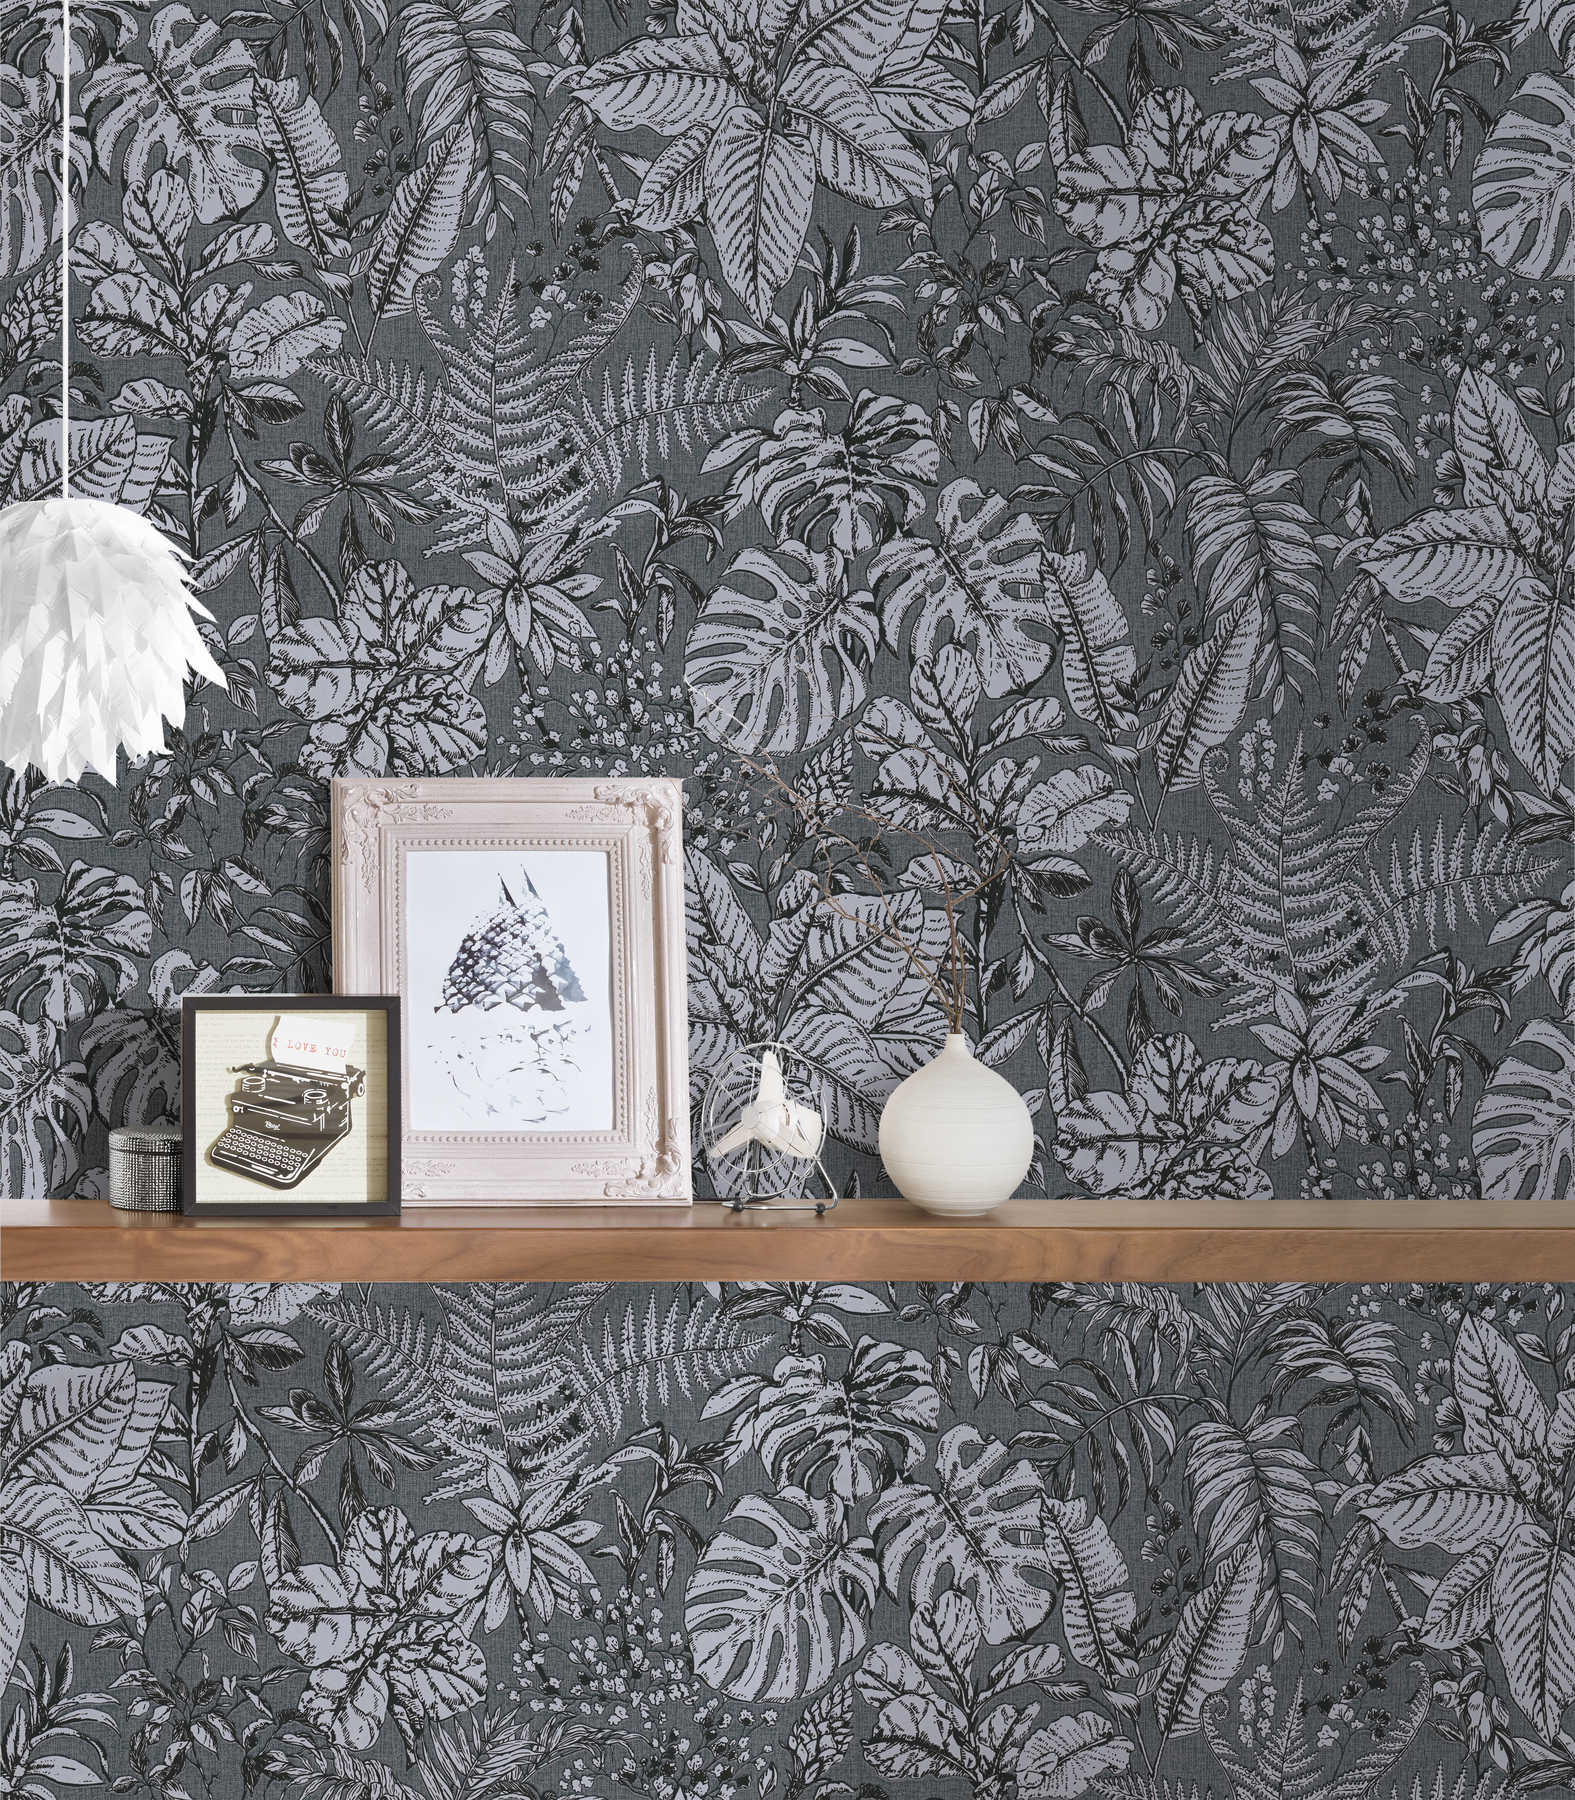             Wallpaper jungle pattern, monstera leaves & ferns - grey, white
        